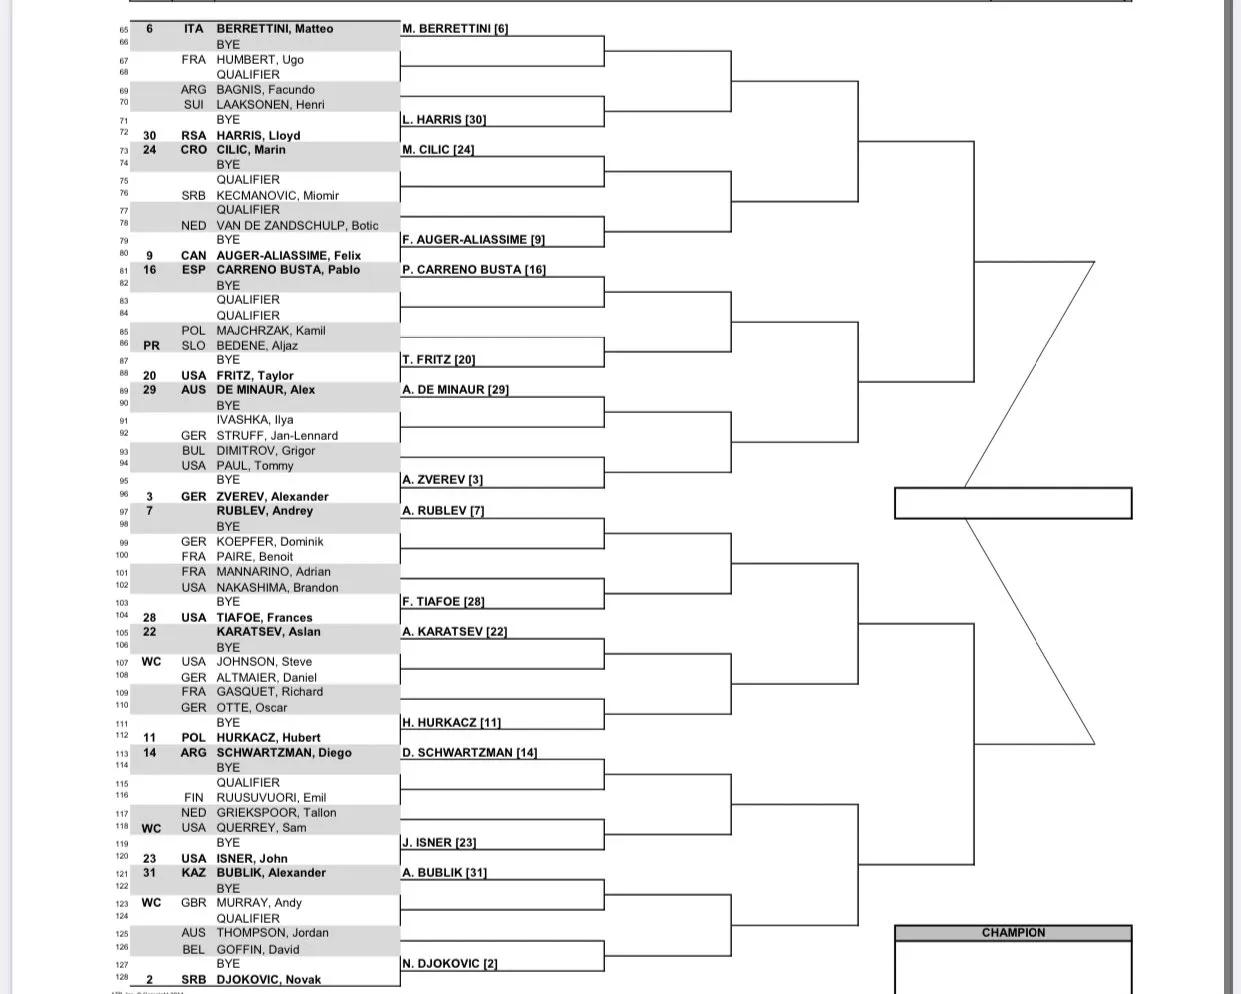 2023 BNP Paribas Open Indian Wells draw - part2